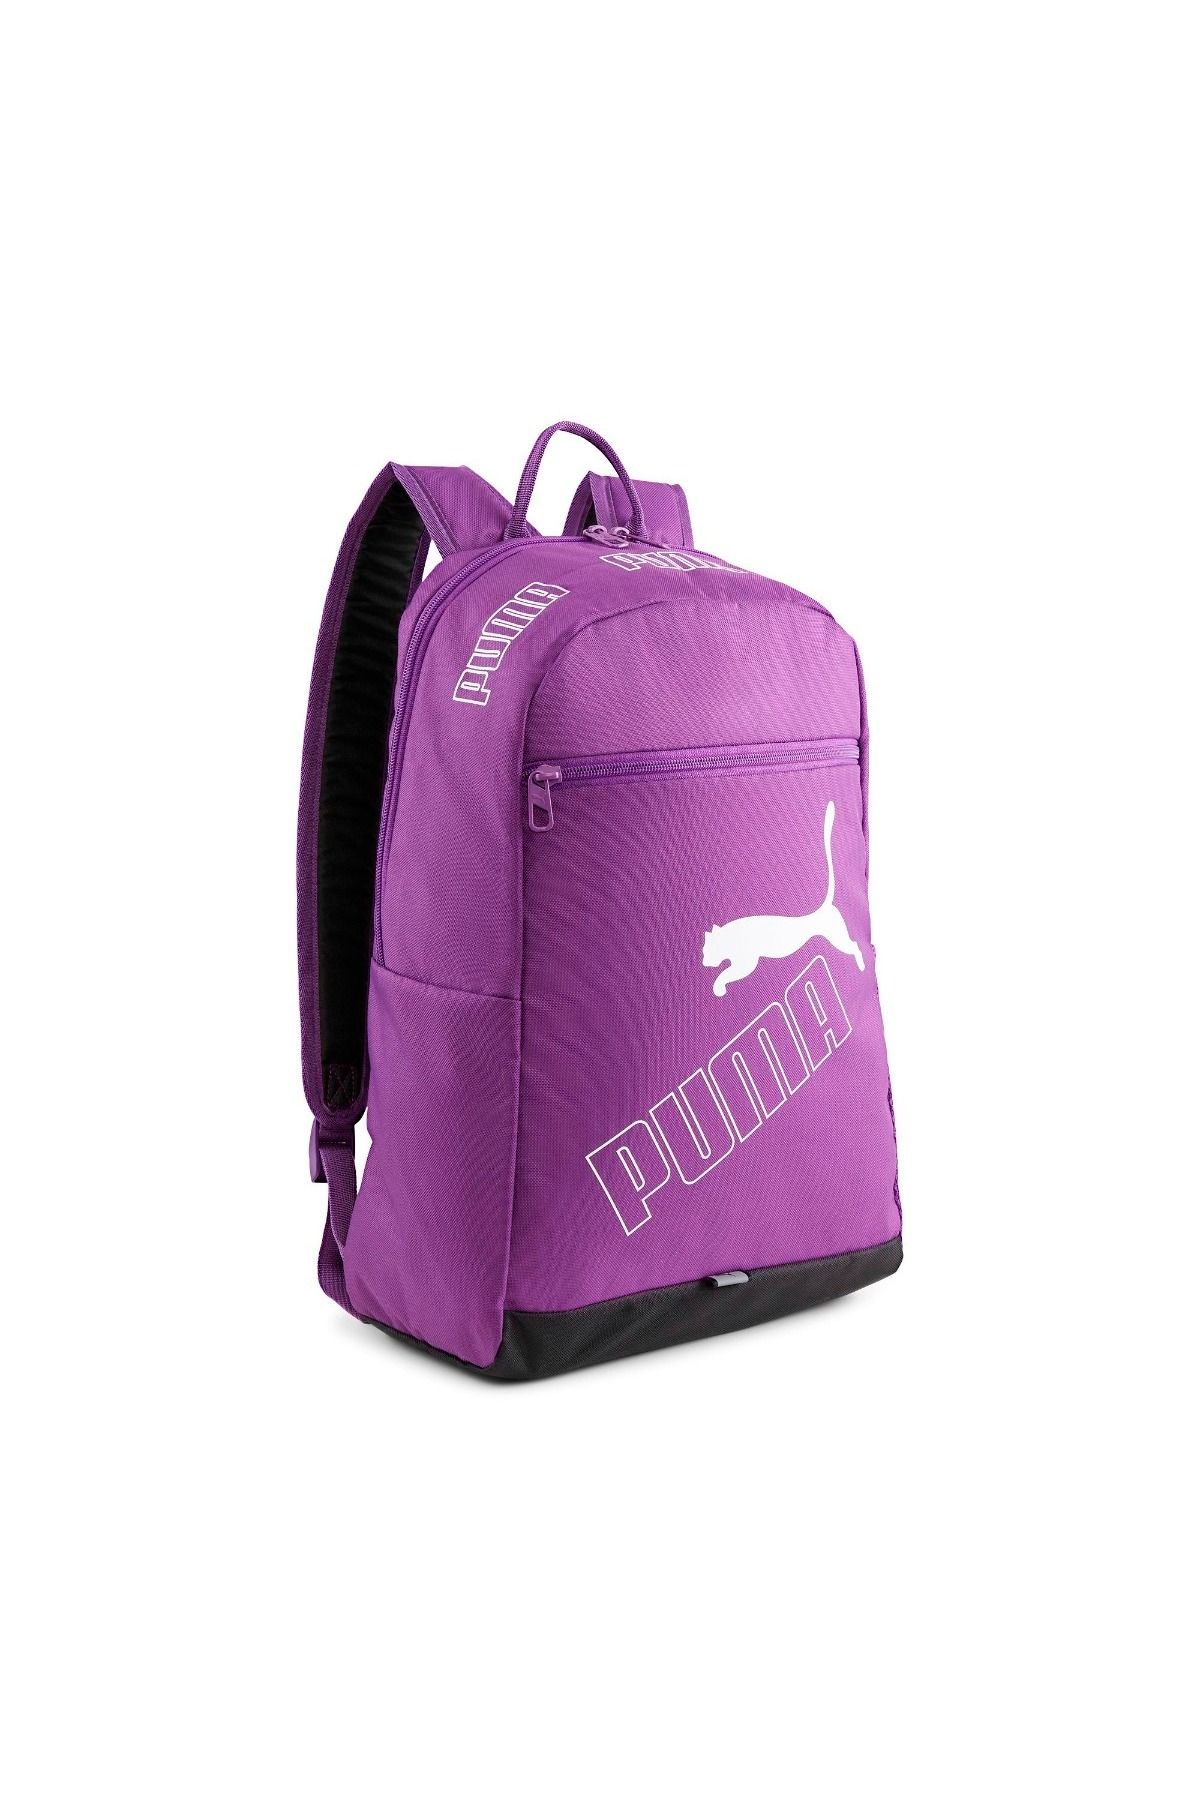 Puma 79952 Backpack Unisex